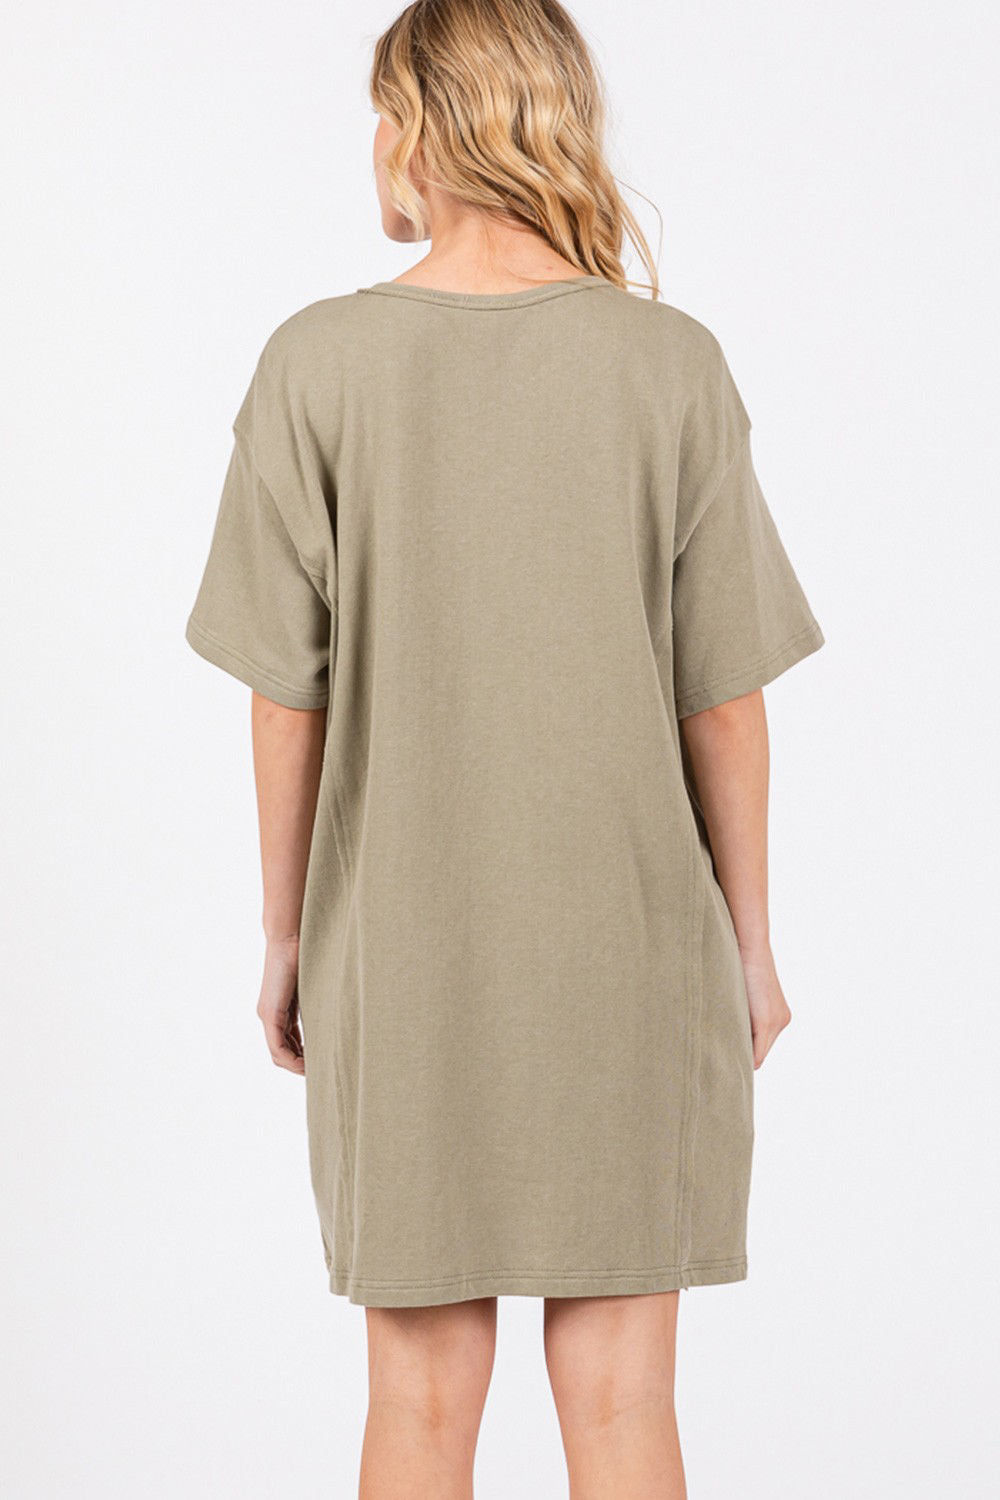 Olive Short Sleeve T-shirt Dress